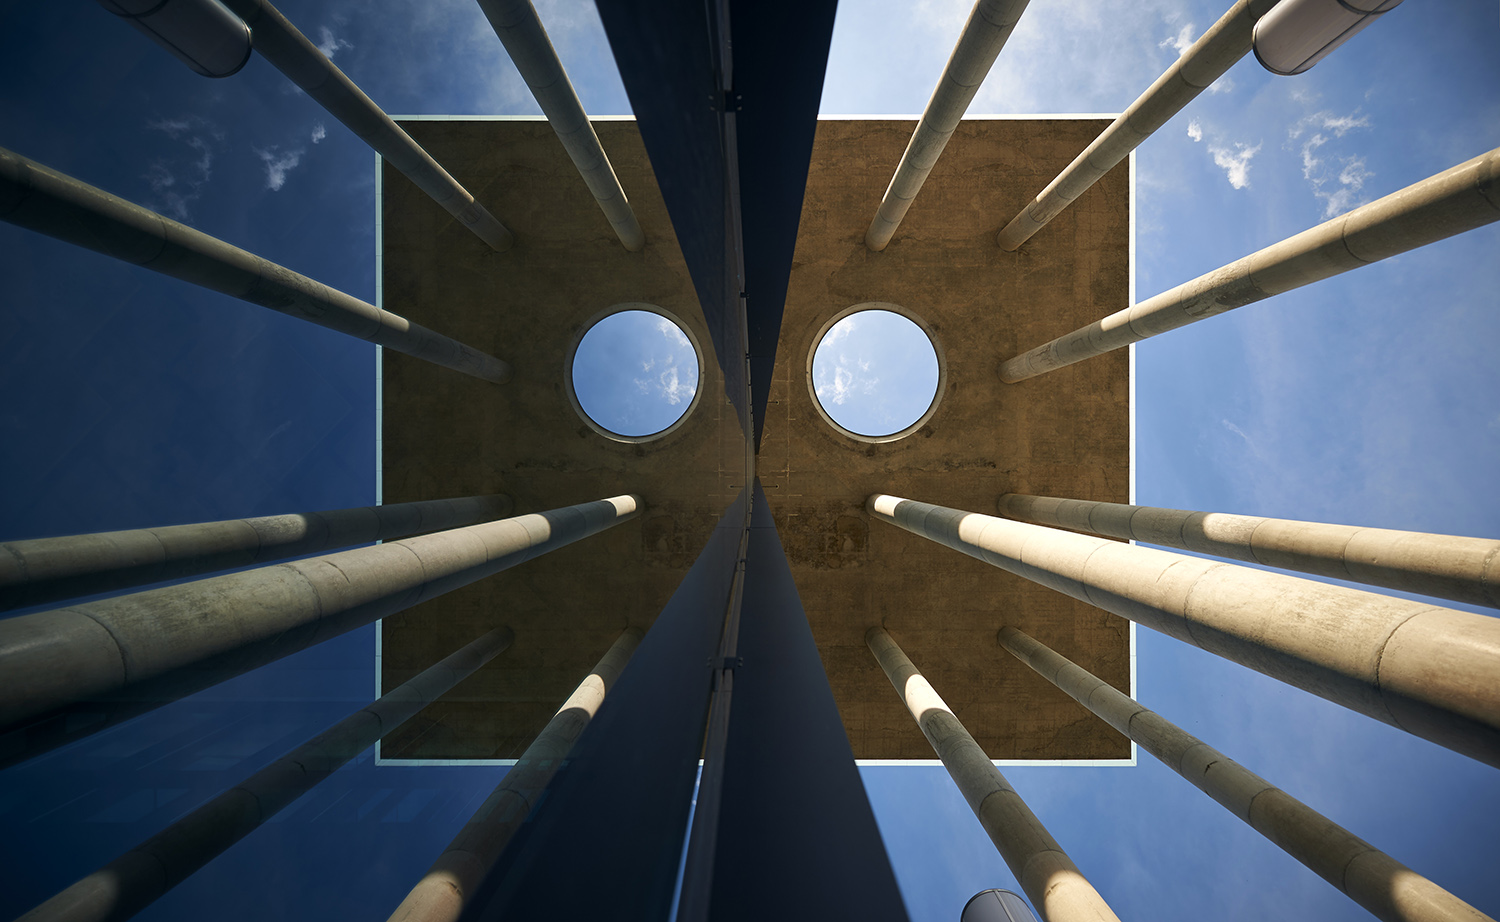 Circular oculus in the concrete canopy